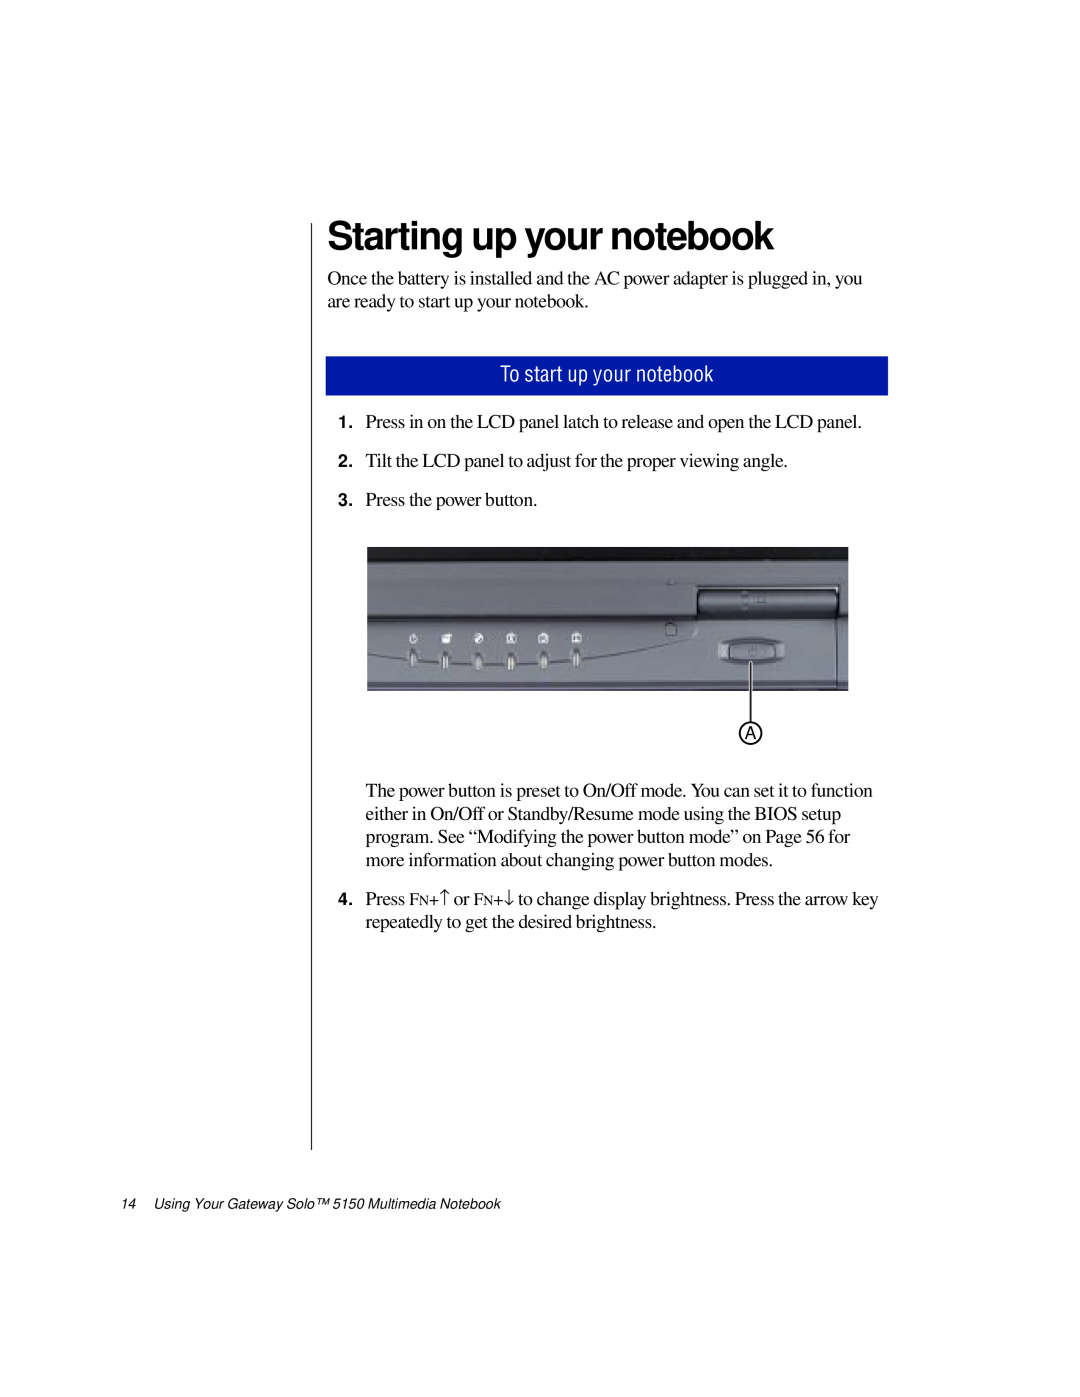 Gateway TM 5150 manual Using Your Gateway Solo 5150 Multimedia Notebook 